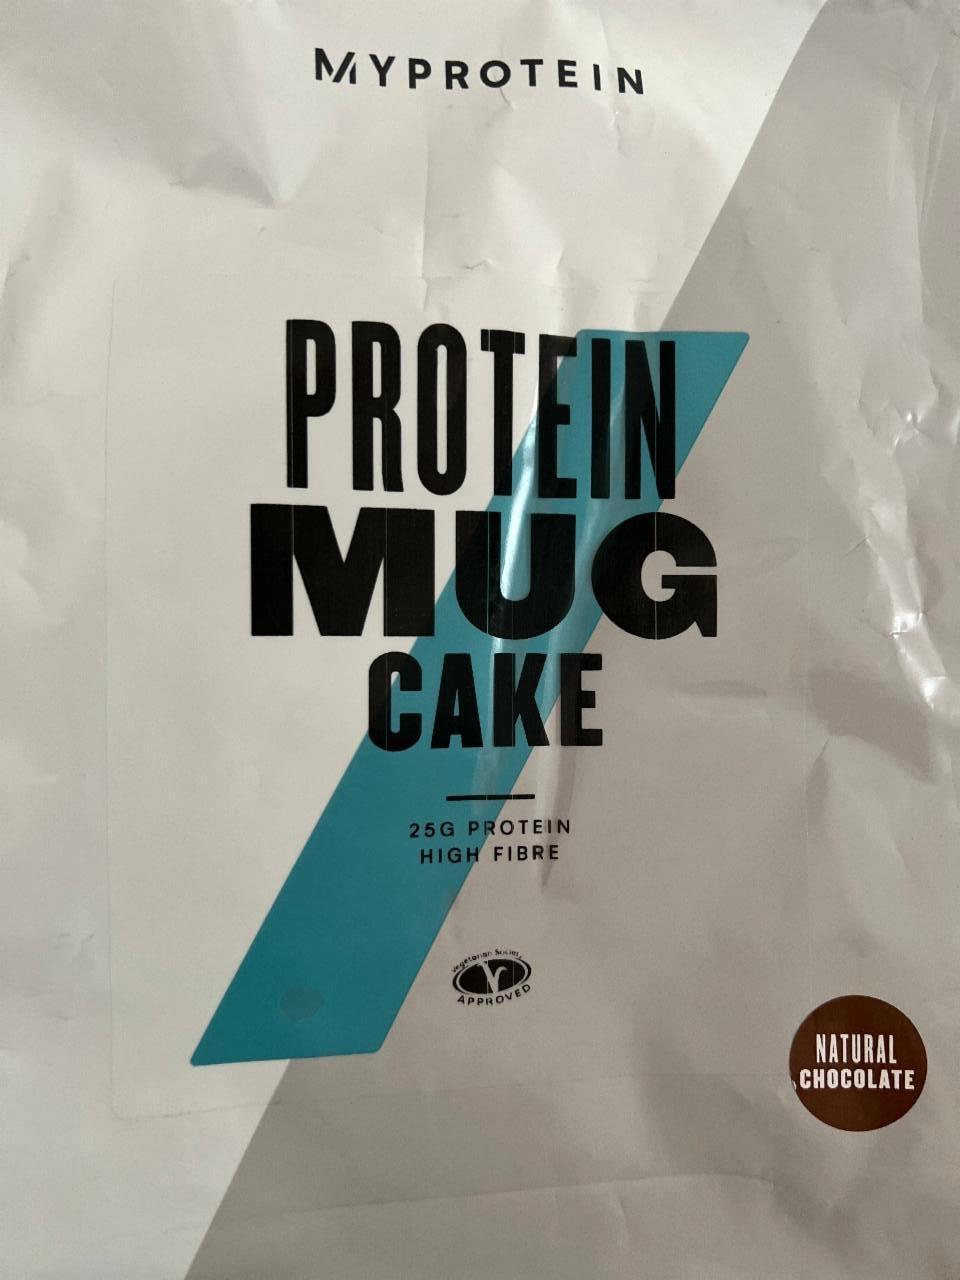 Képek - Protein mug cake Natural chocolate MyProtein